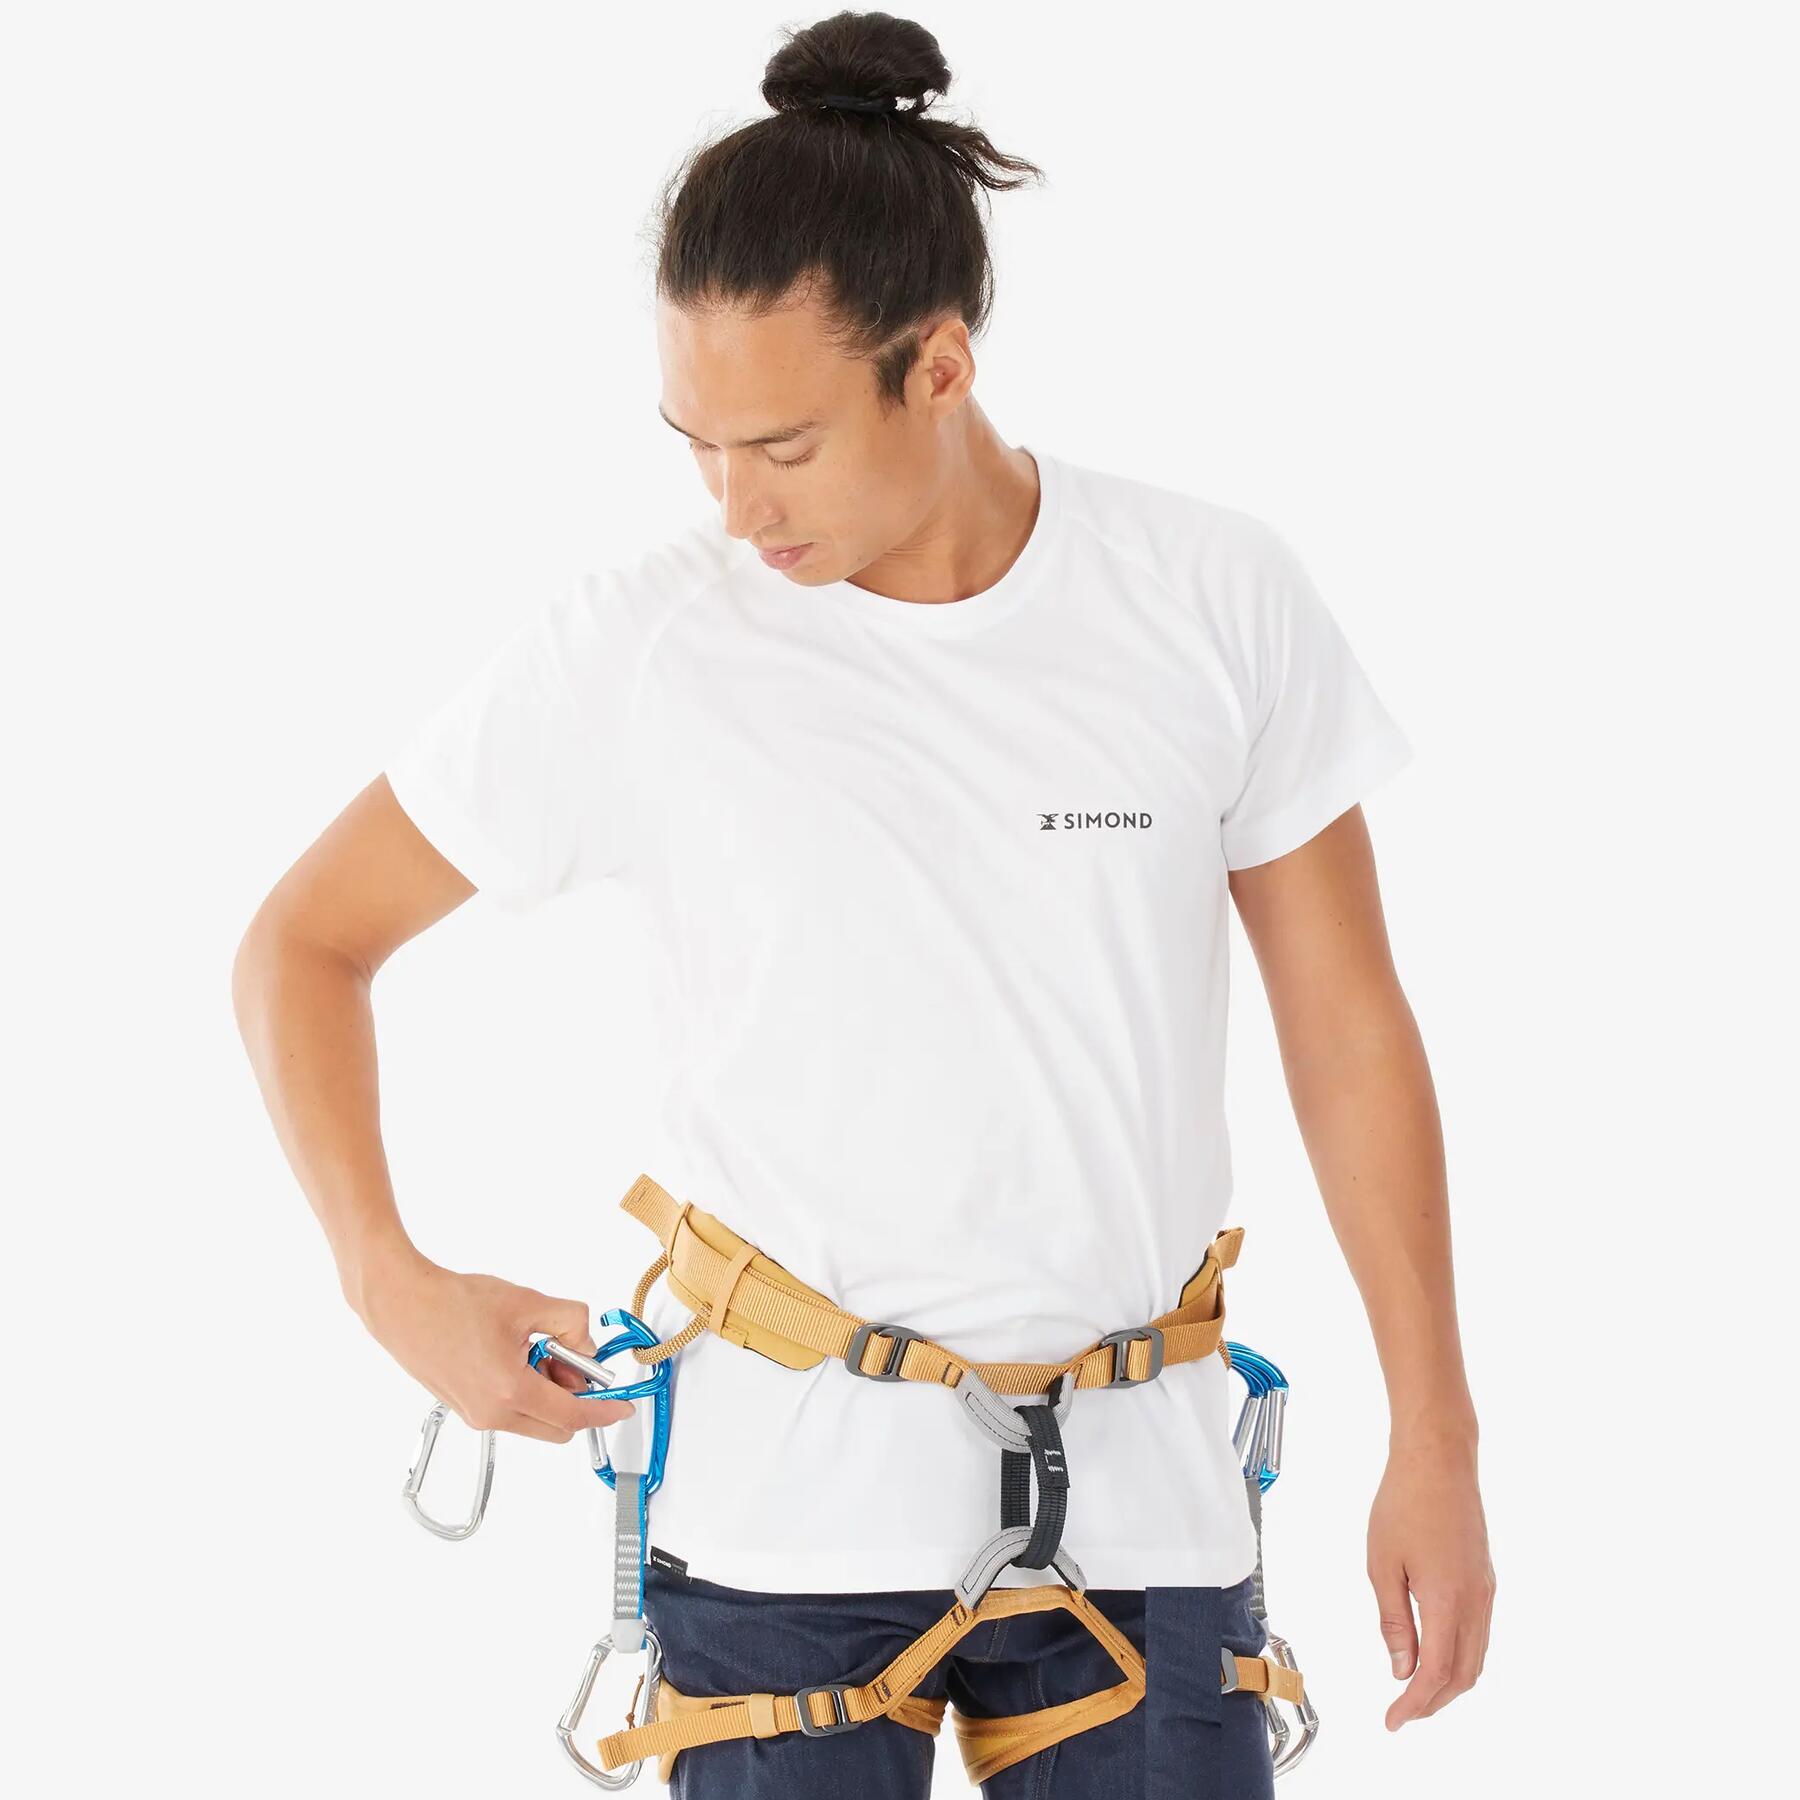 Man in a white t-shirt wearing a climbing harness